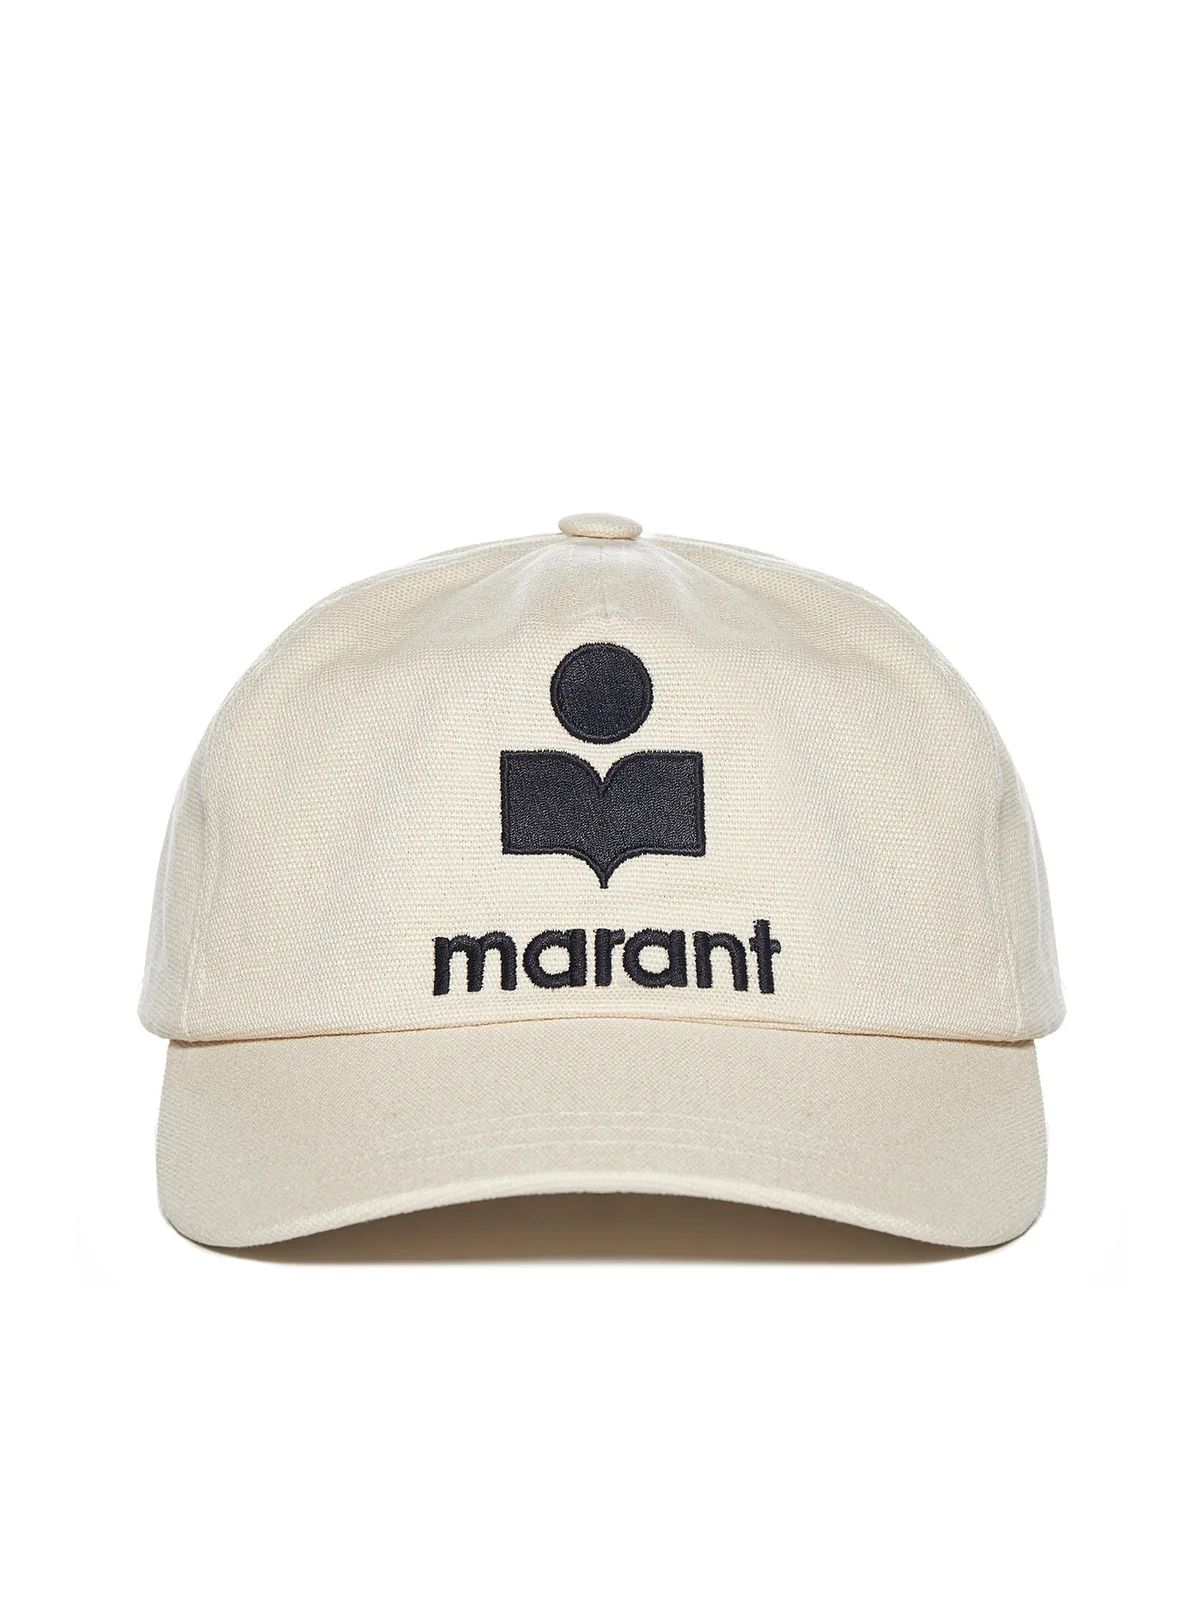 Isabel Marant Logo Embroidered Baseball Cap | Cettire Global